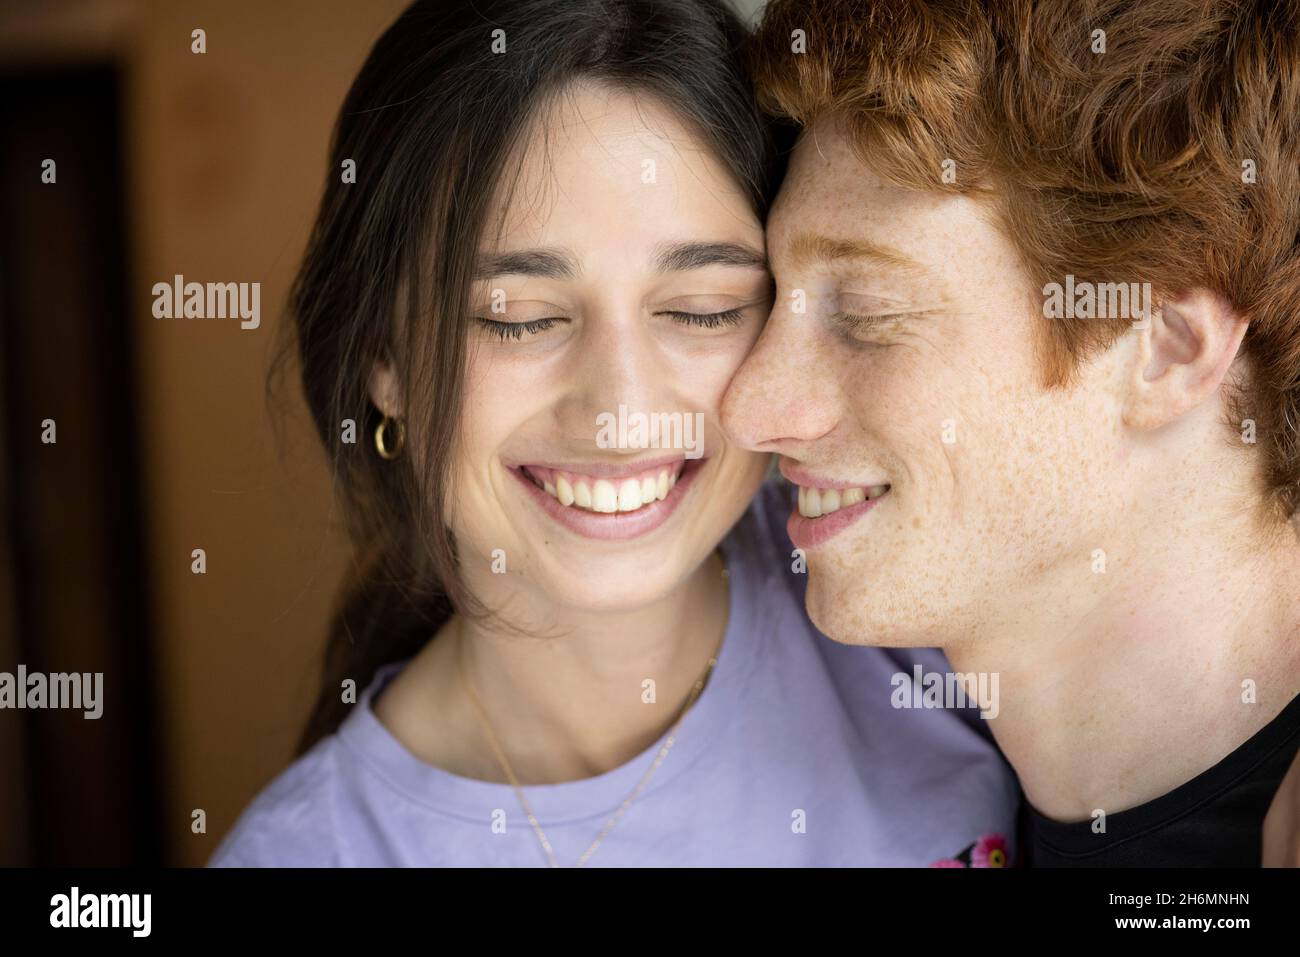 Portrait of smiling couple Stock Photo